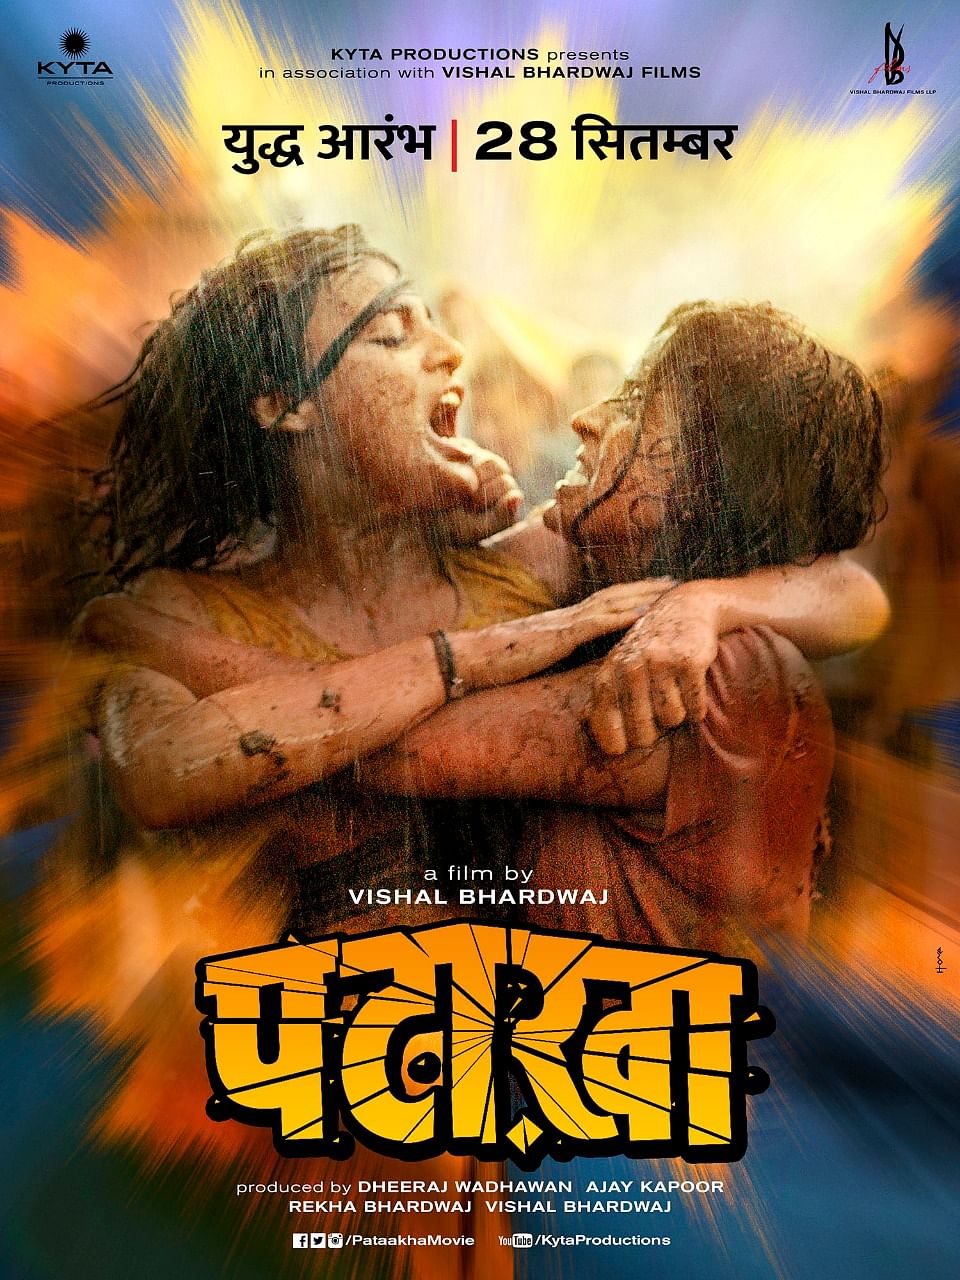 The film features Sanya Malhotra of ‘Dangal’ fame, Radhika Madan and Sunil Grover.